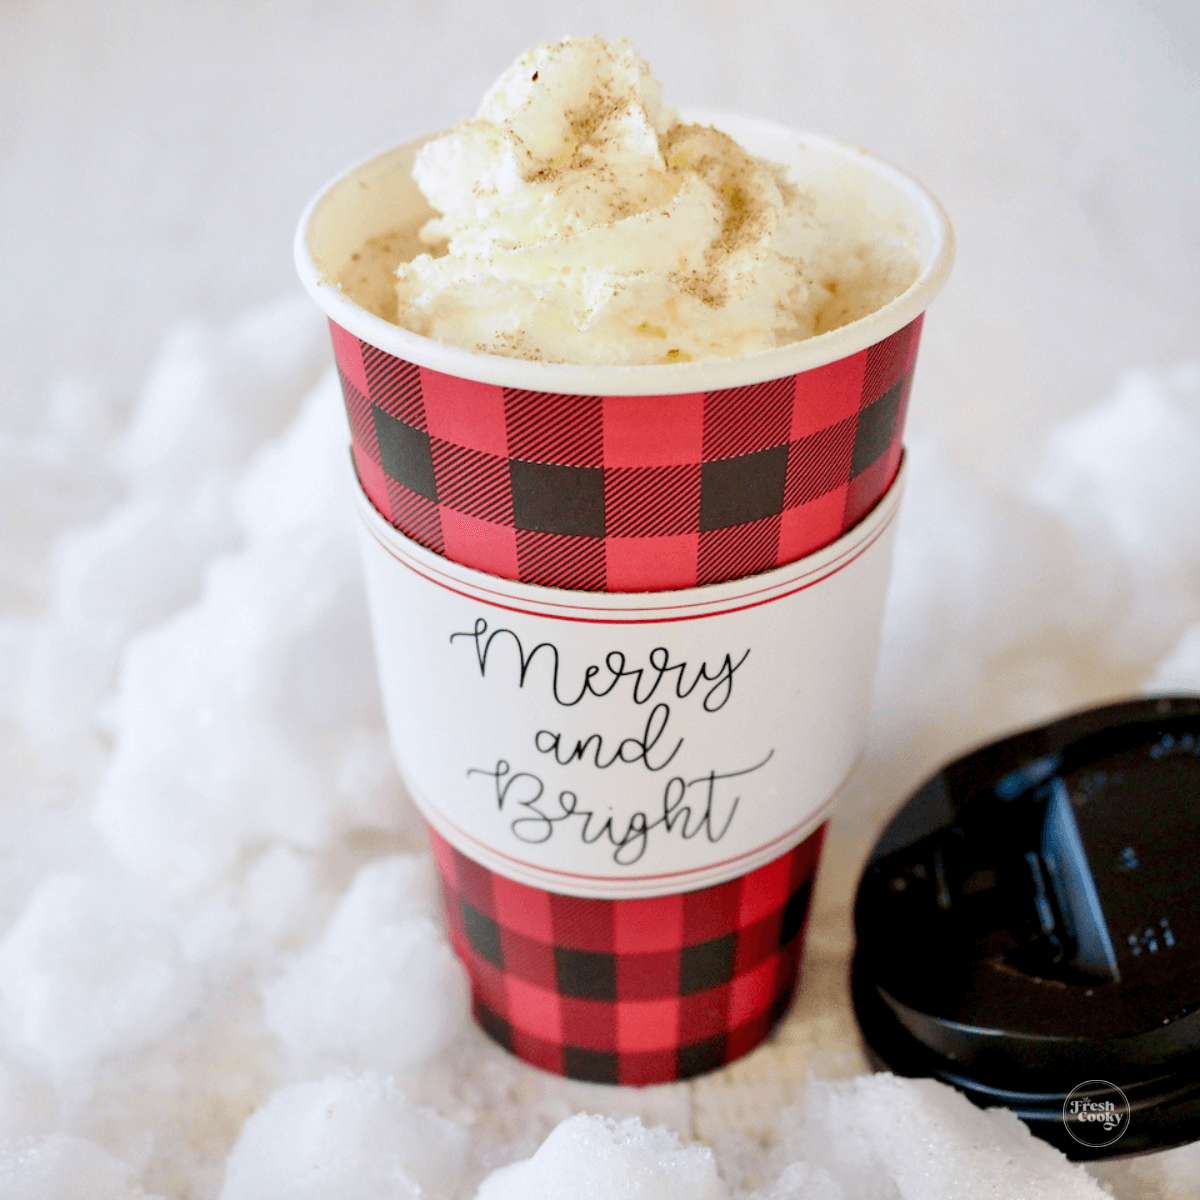 Starbucks Copycat Eggnog Latte in festive Christmas cup.